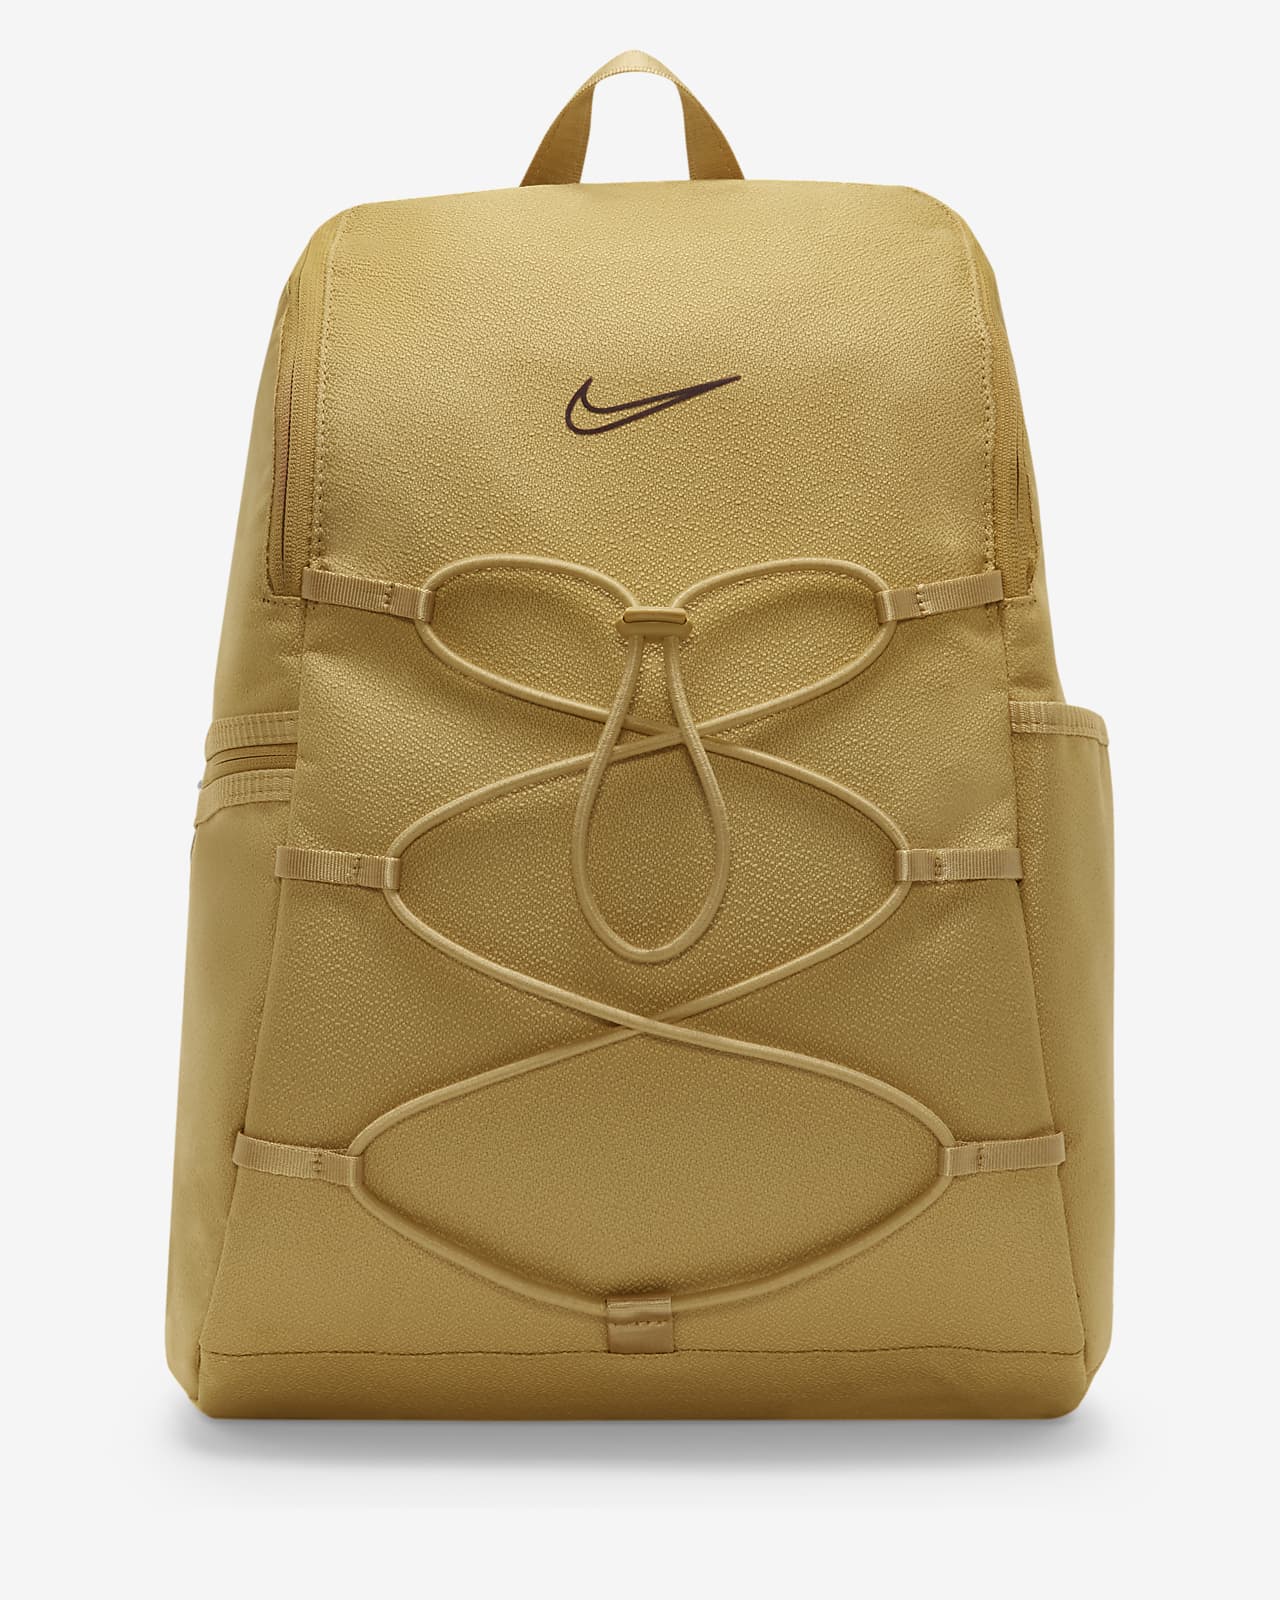 Nike One Damen-Trainingsrucksack (16 l)